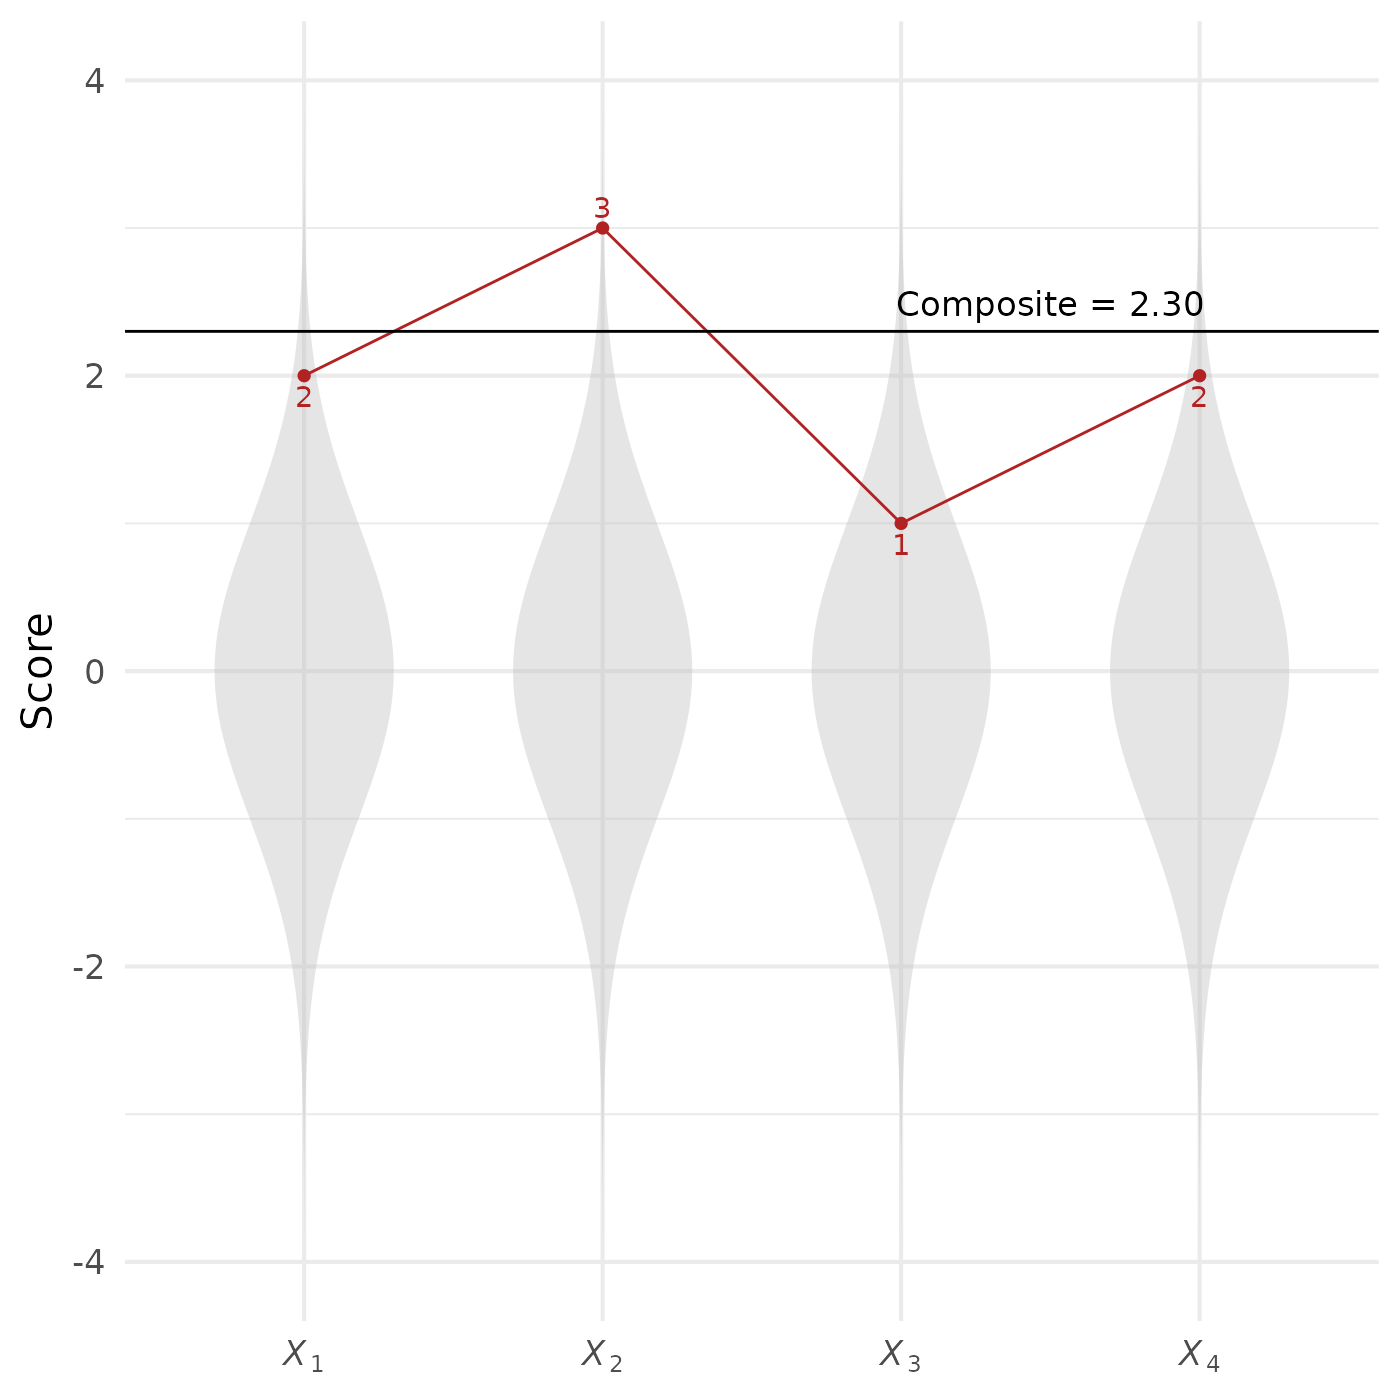 Figure 1. Example profile in a standard multivariate normal distribution.